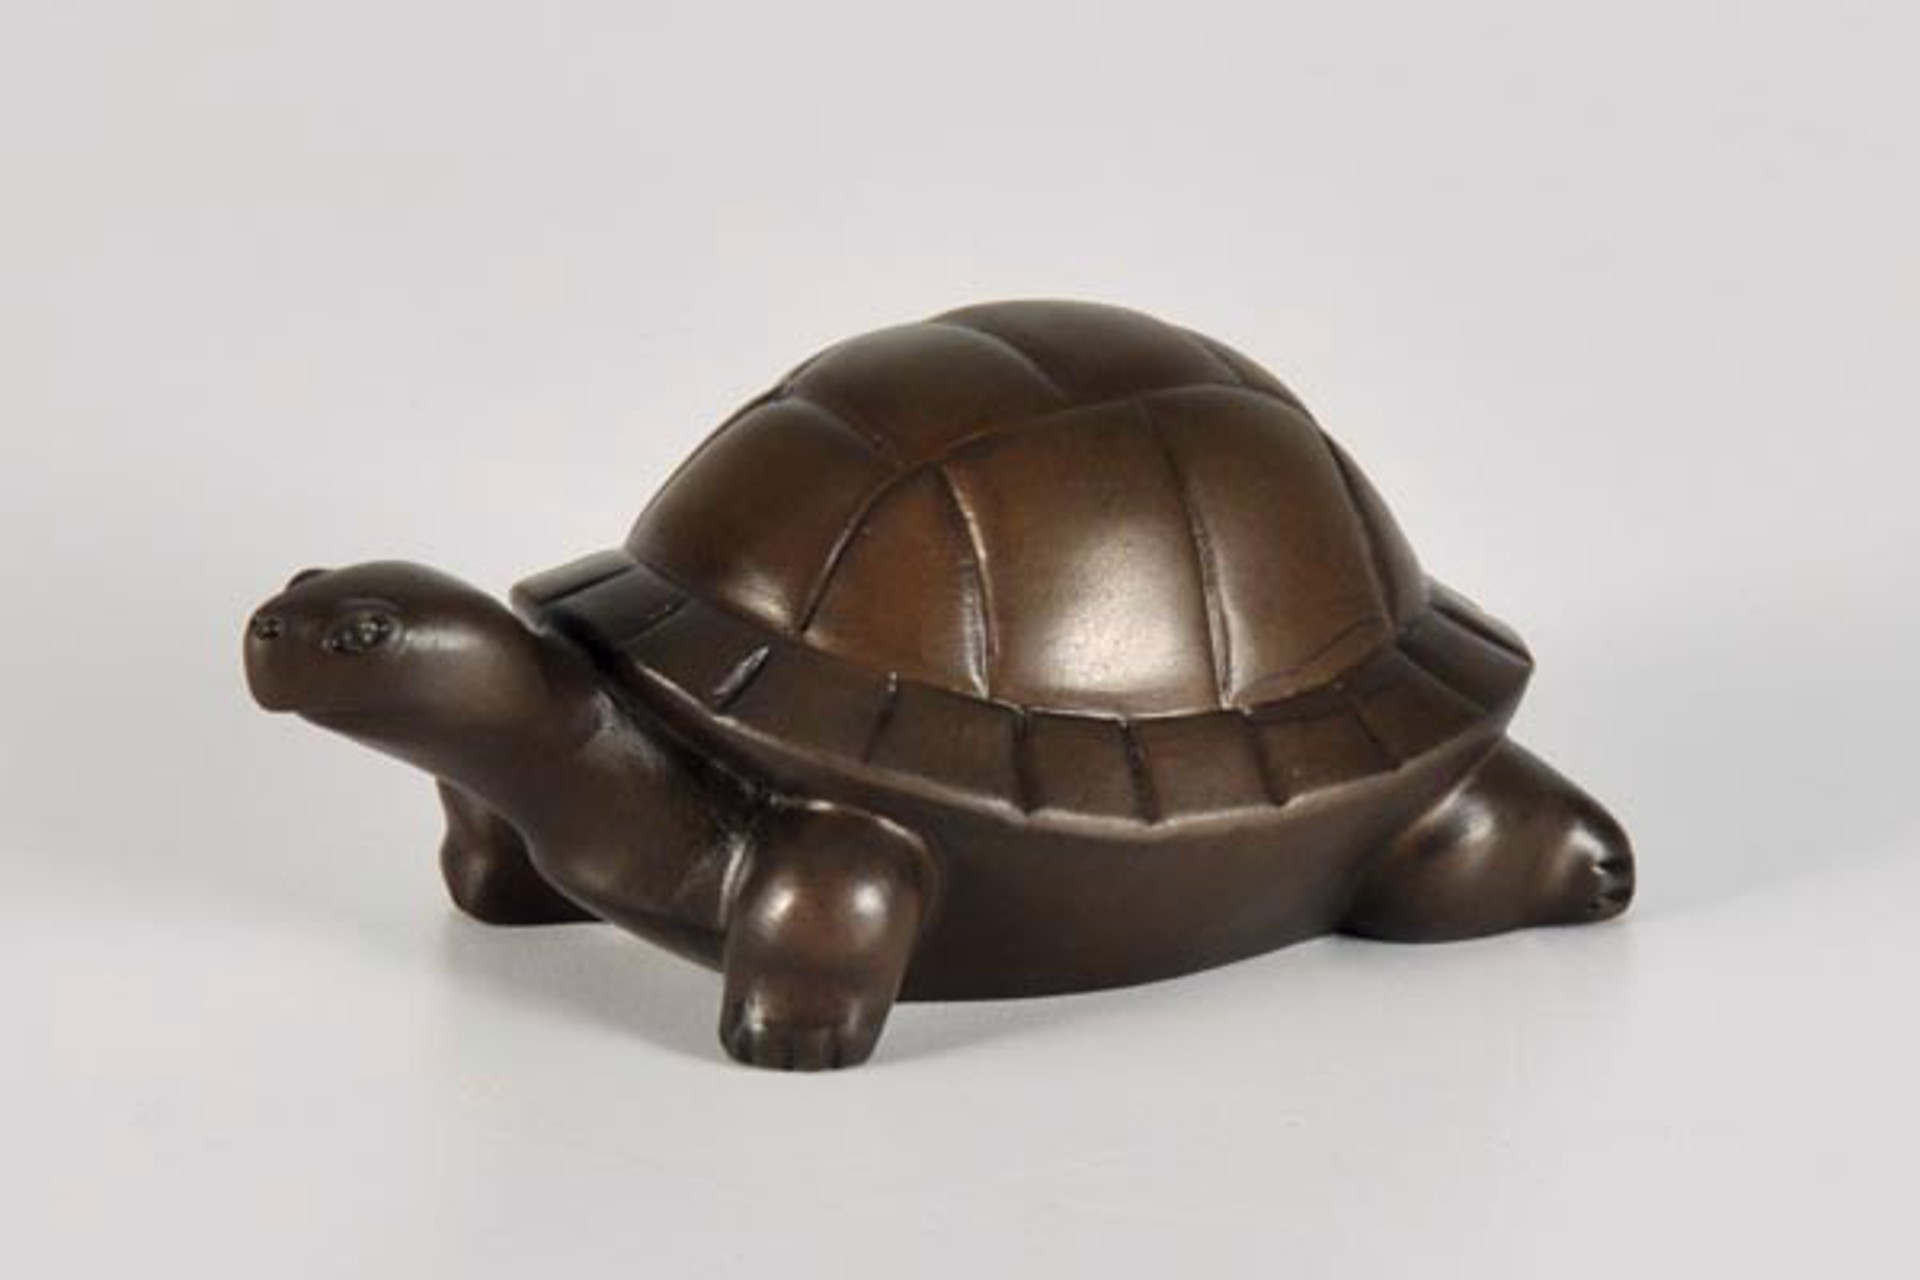 Box Turtle by David Everett